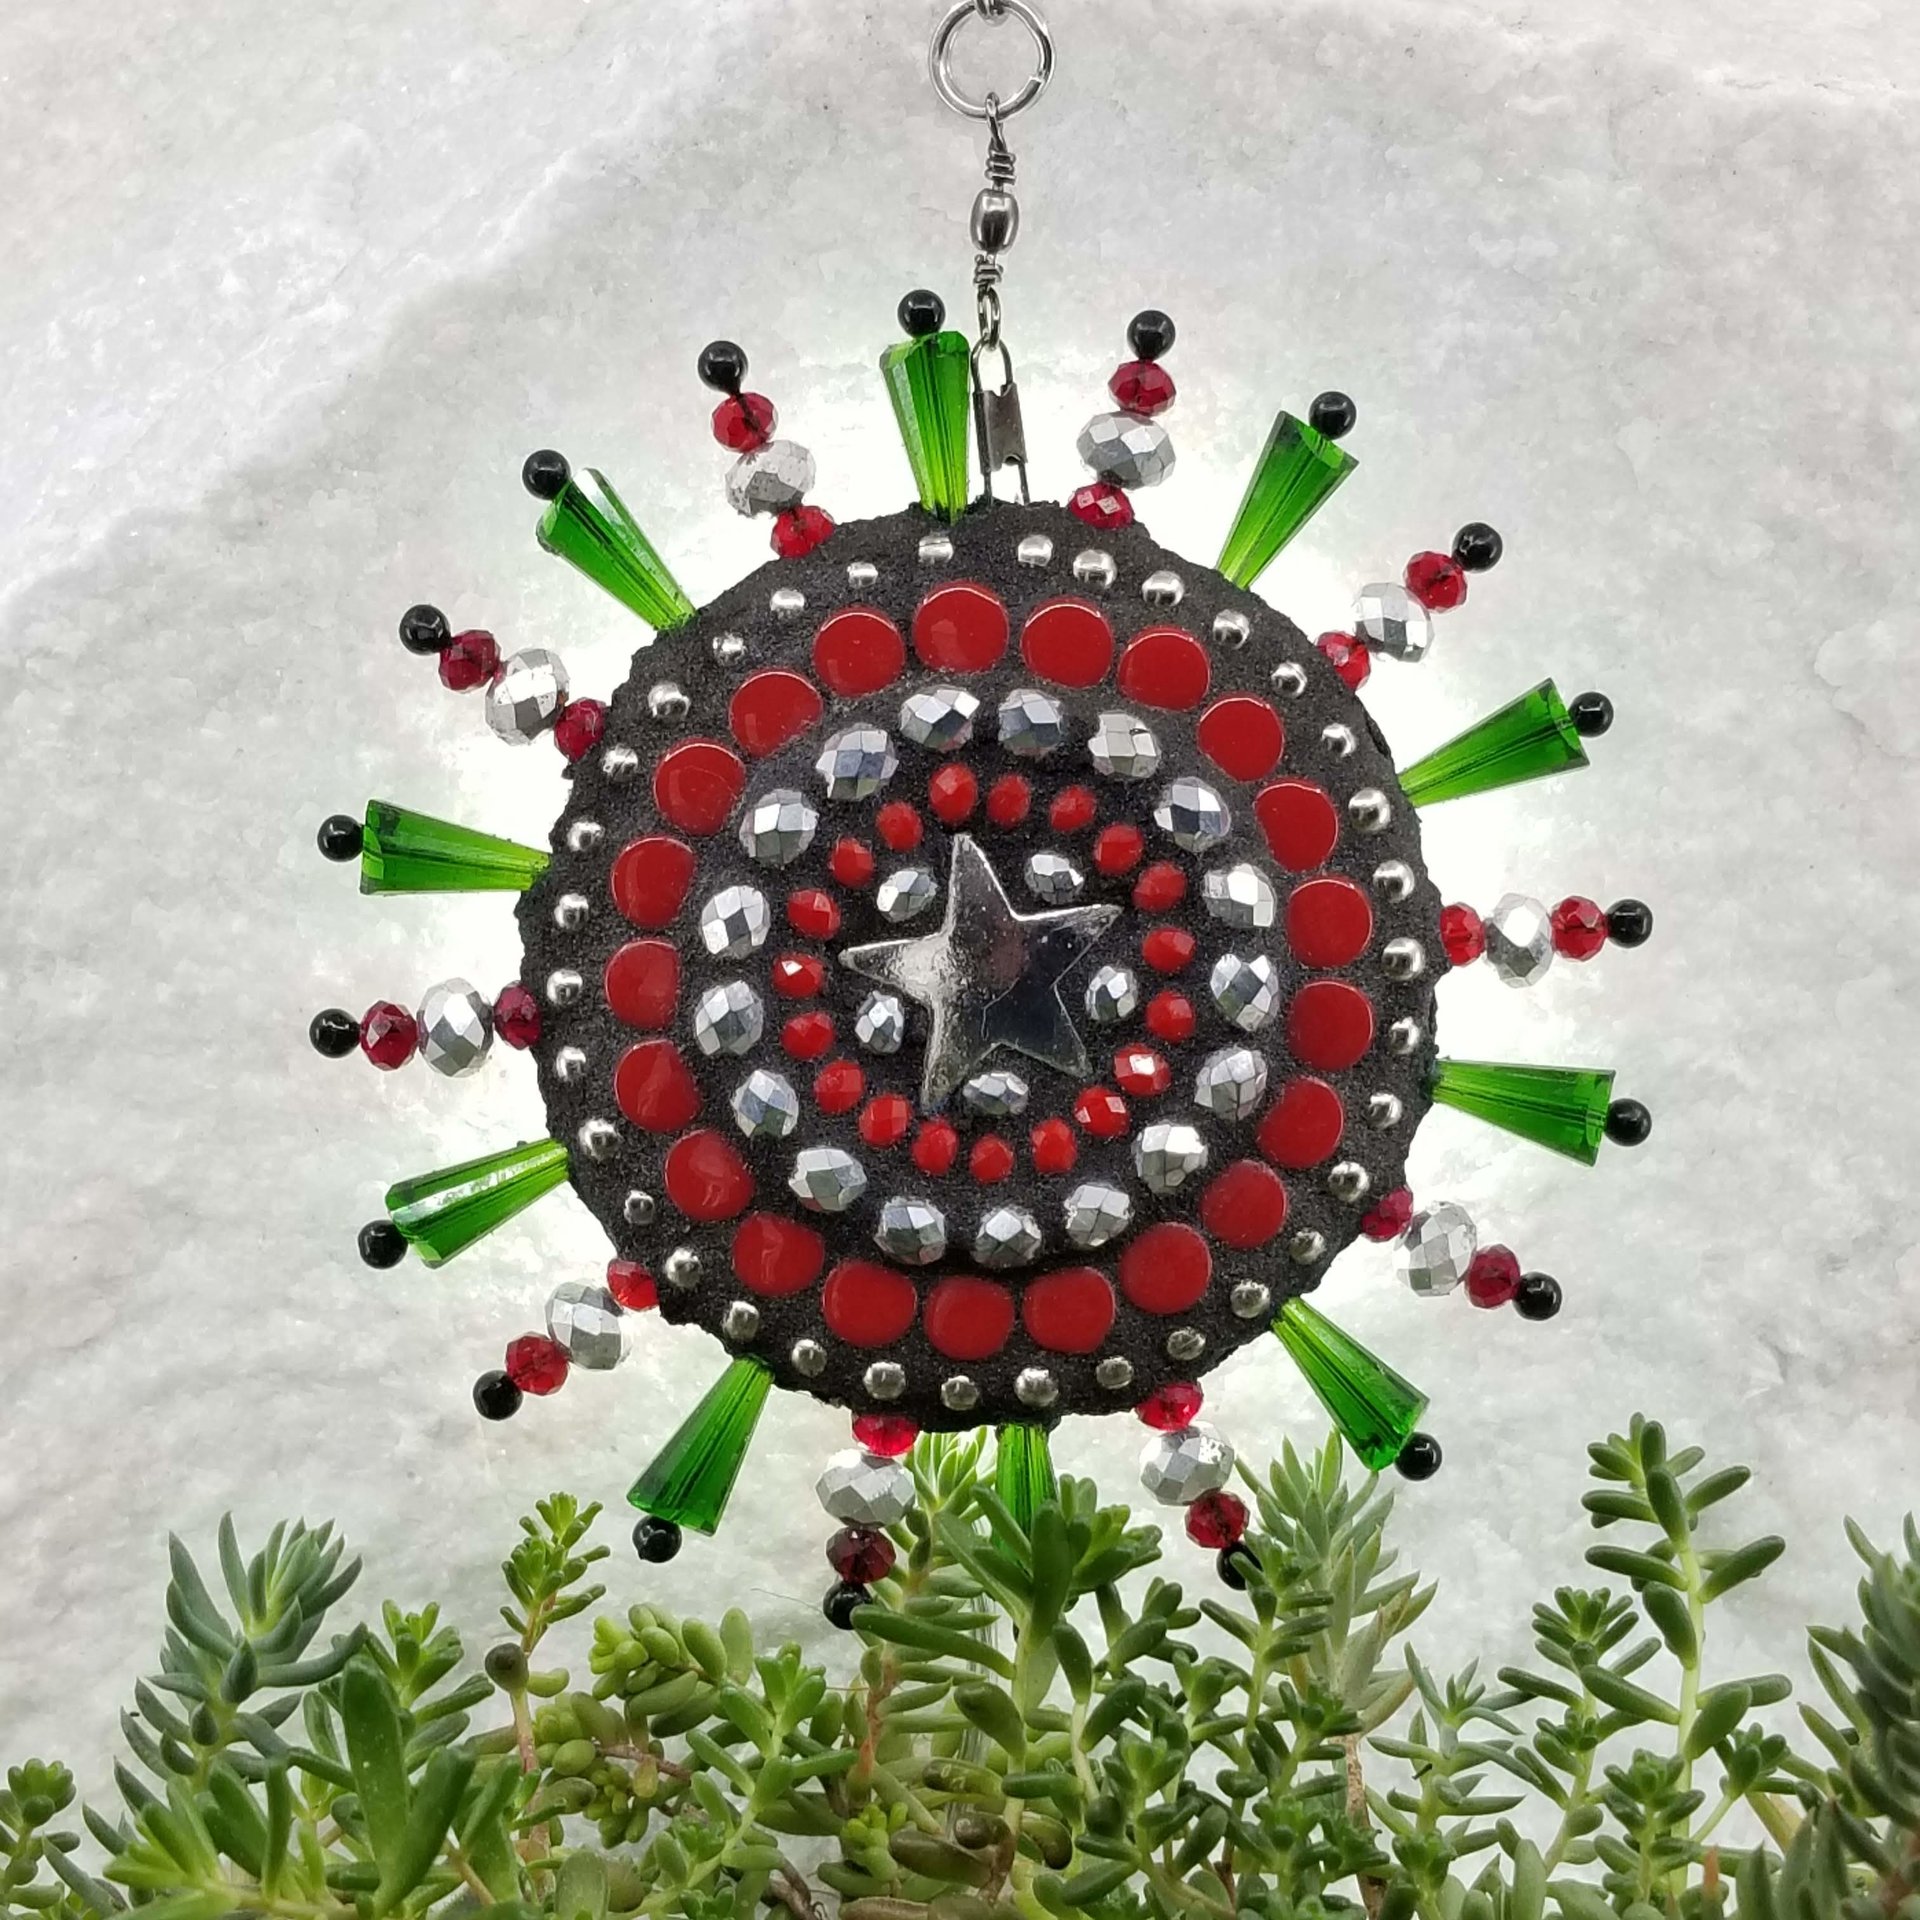 Christmas Star Ornament, Mosaic Garden Wind Spinner, Red Rays, Home and Garden Decor, Gardening Gift, Suncatcher